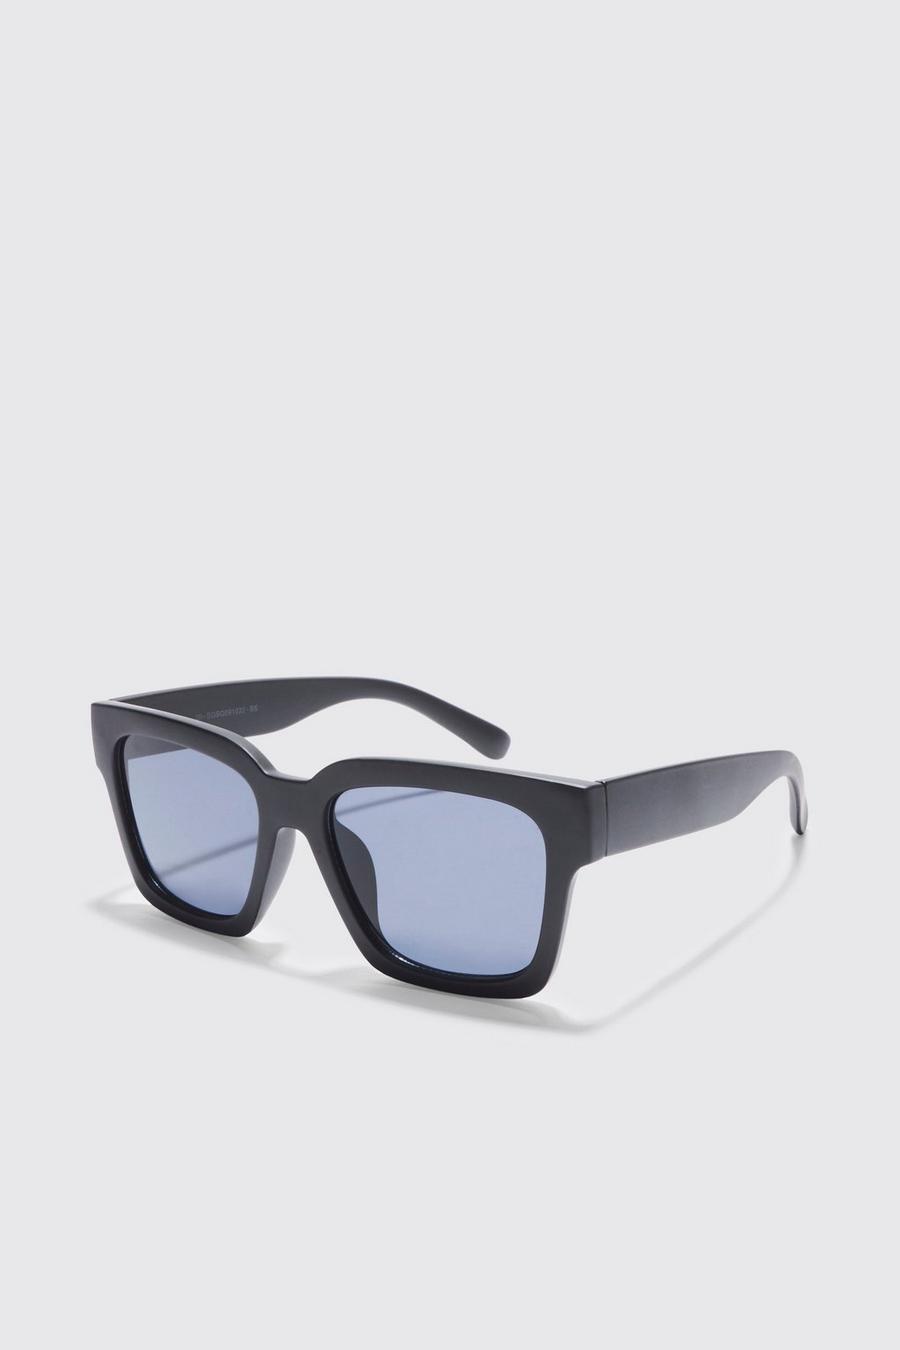 Narrow Classic Sunglasses, Black nero